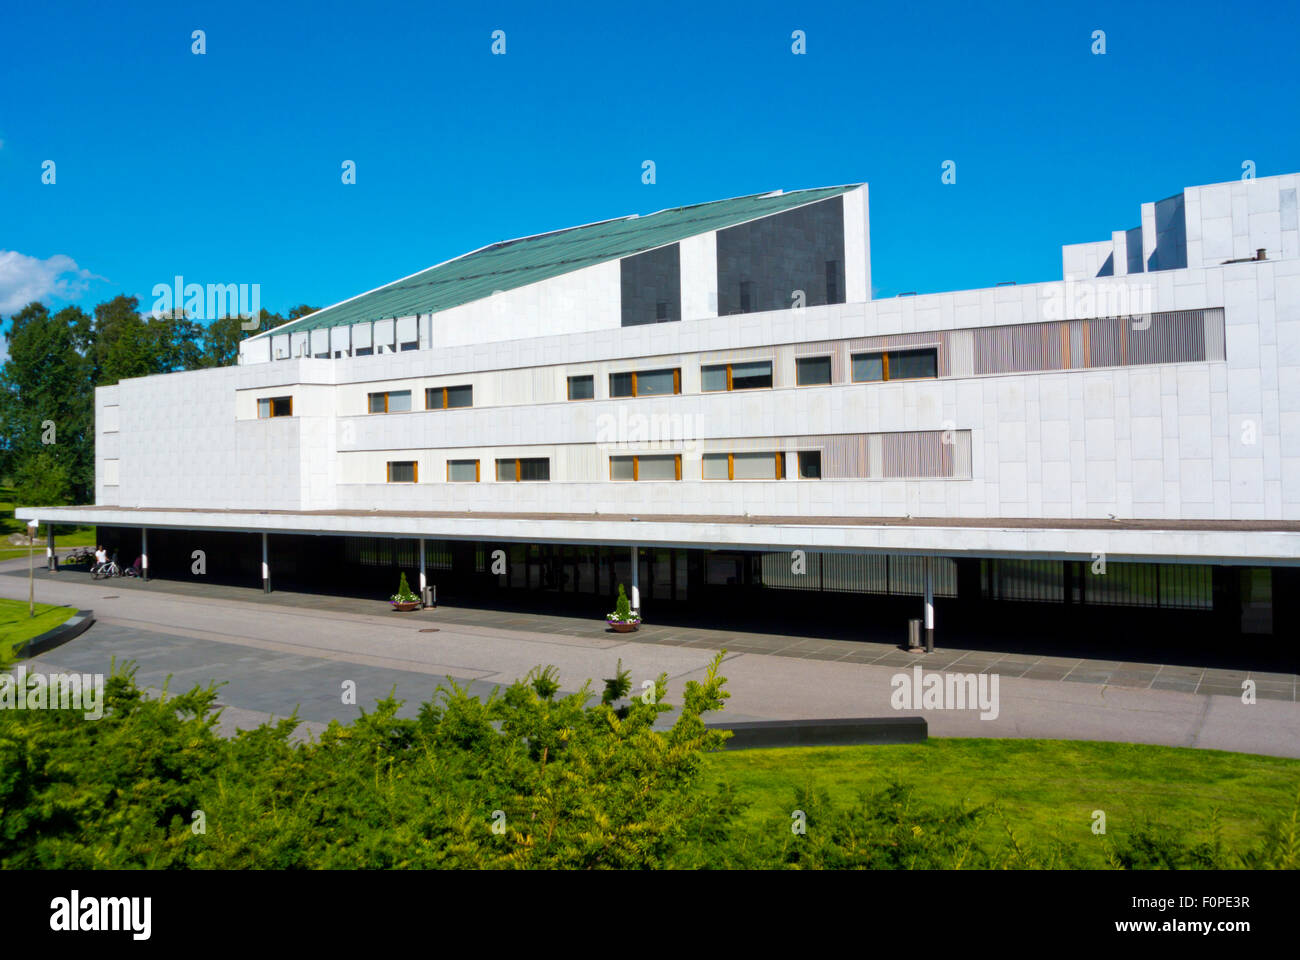 Finlandia-talo, Finlandia hall (1971-1975), events and concert hall, designed by Alvar Aalto, Helsinki, Finland, Europe Stock Photo